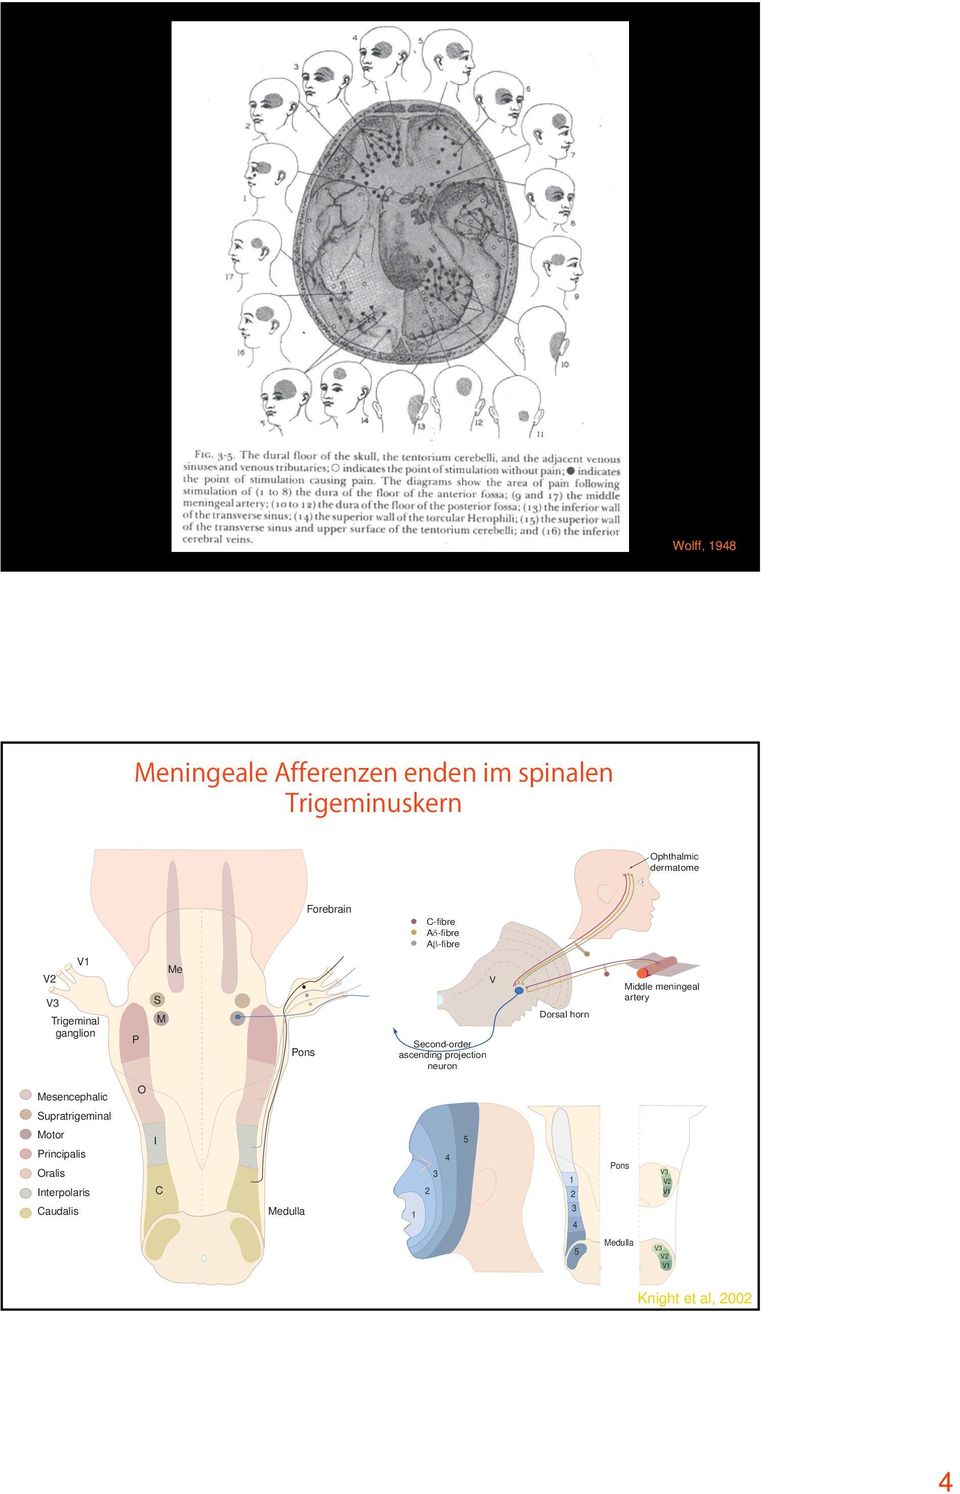 meningeal artery Mesencephalic O Supratrigeminal Motor Principalis Oralis Interpolaris